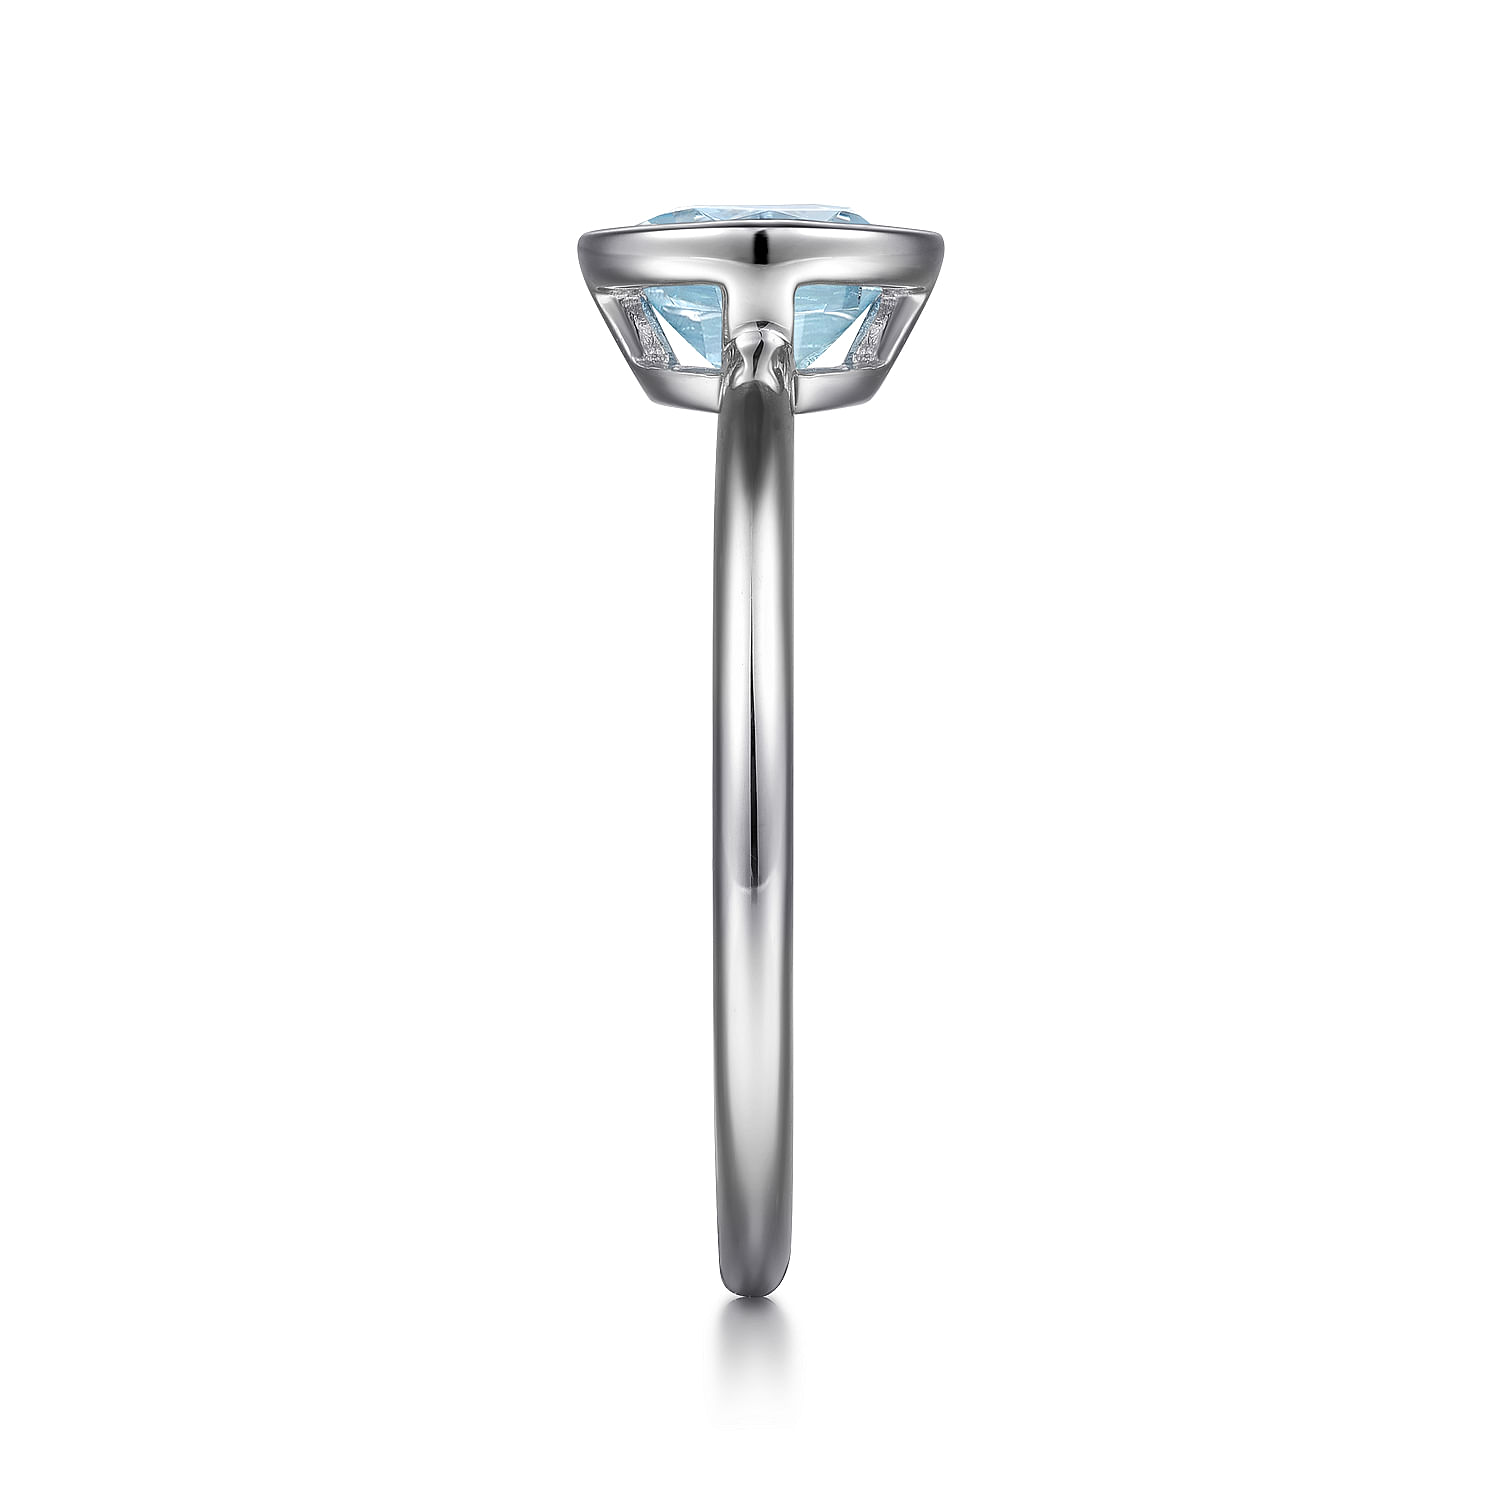 925 Sterling Silver Aquamarine Ring W/Bezel Set